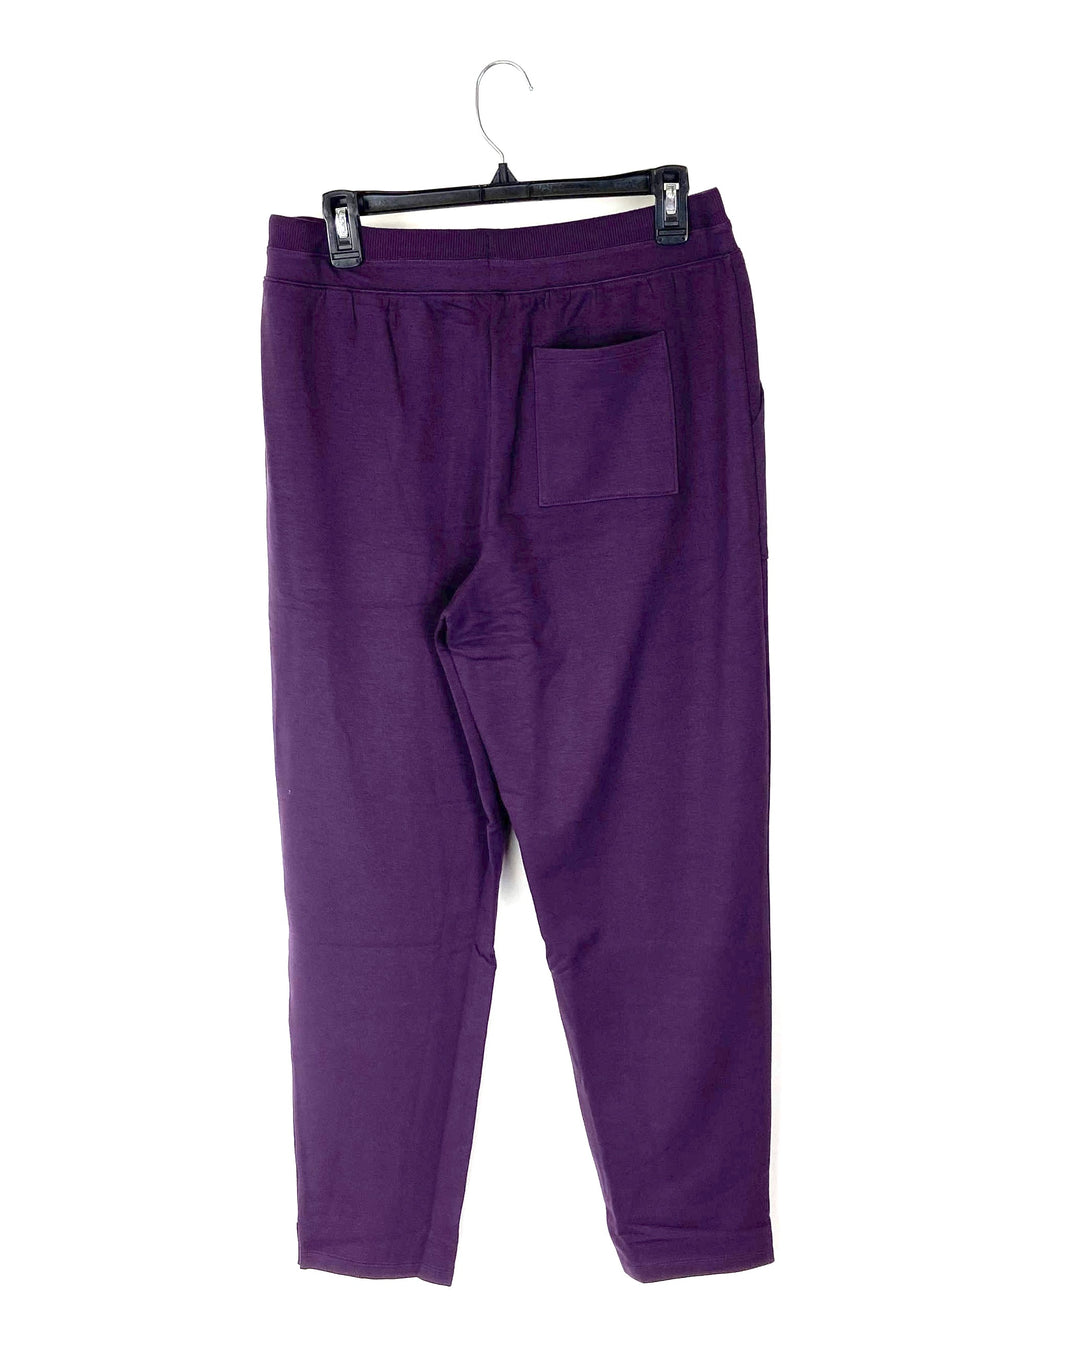 Purple Sweatpants - Extra Small, Small and Medium